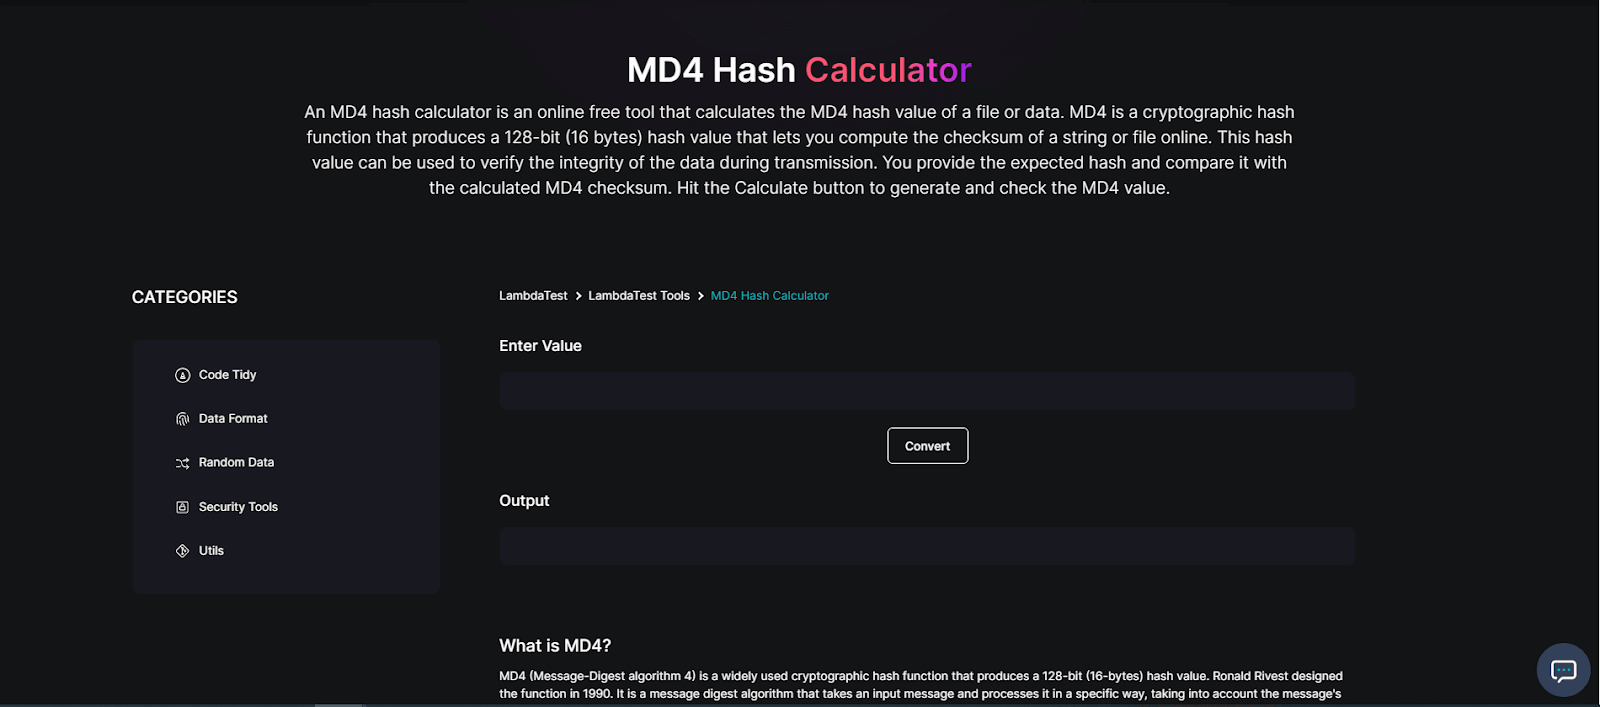 MD2 Hash Calculator